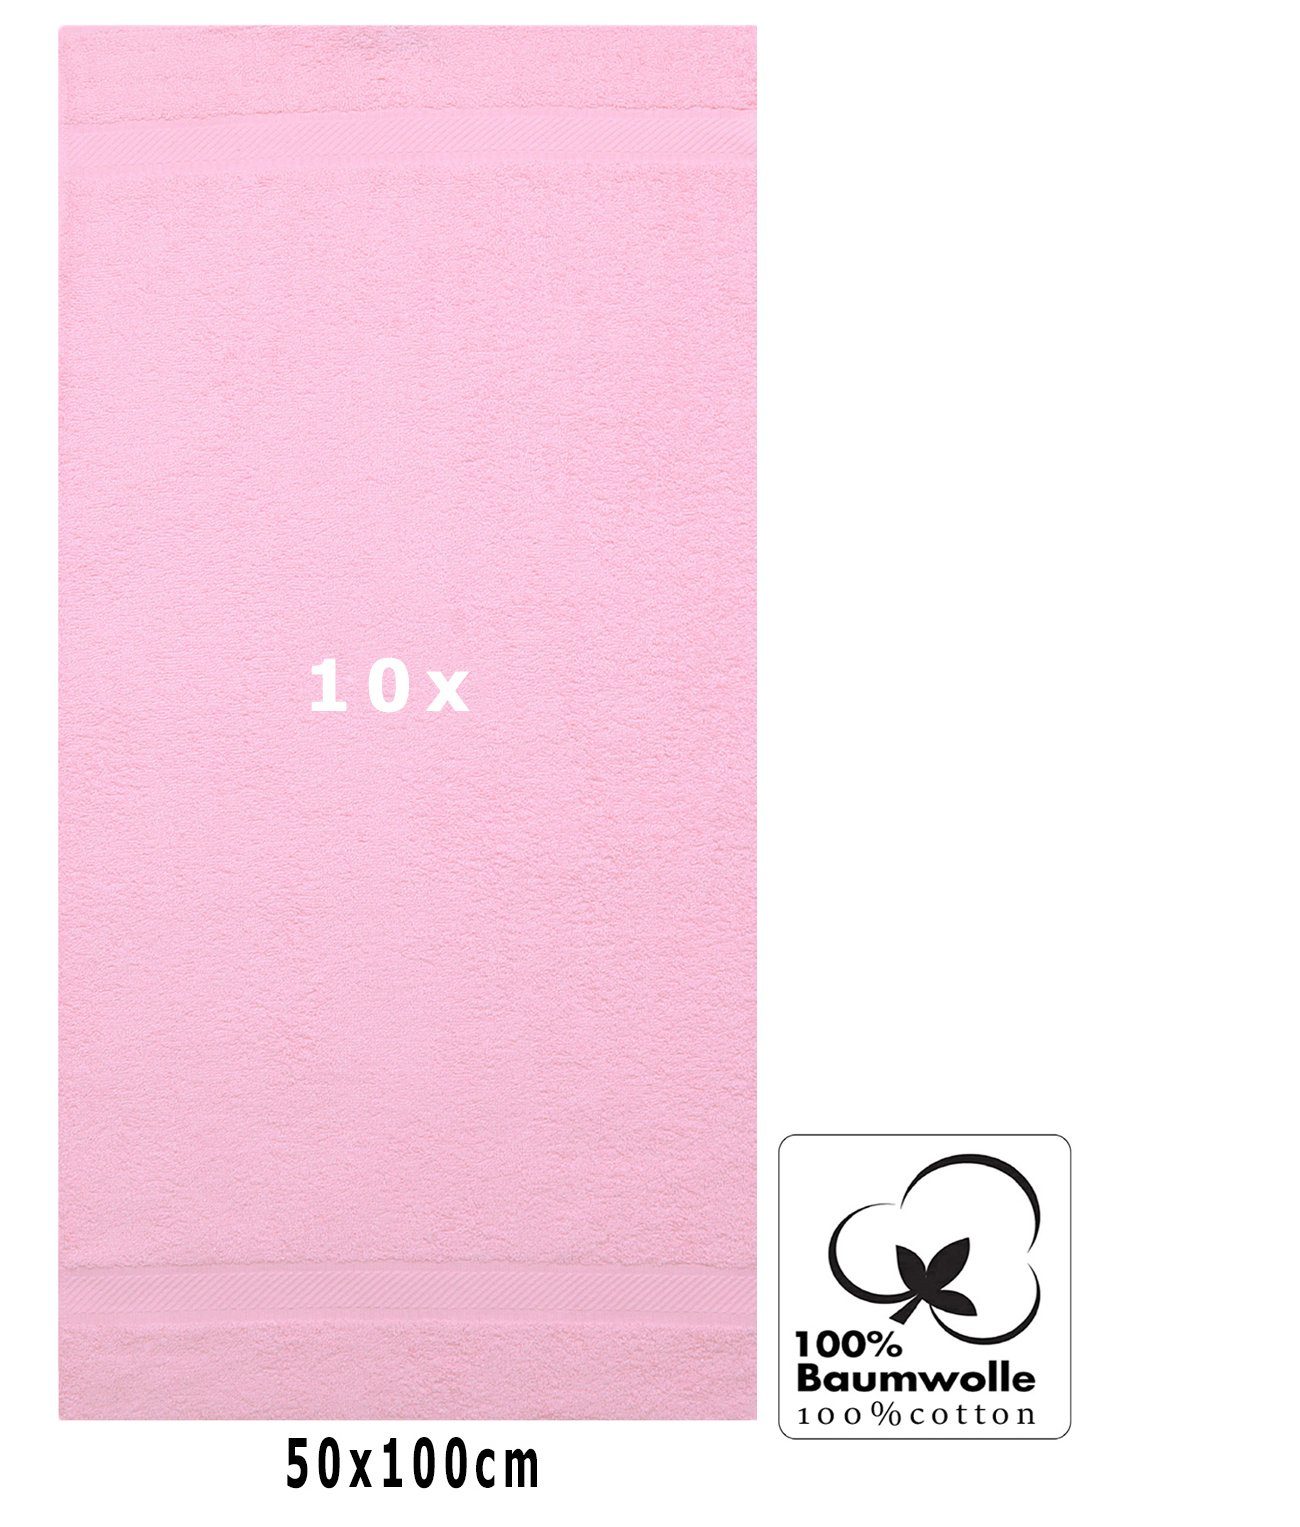 Betz Handtücher 10 Stück Handtuch-Set 100% Baumwolle Farbe Rosé, 50x100cm Palermo